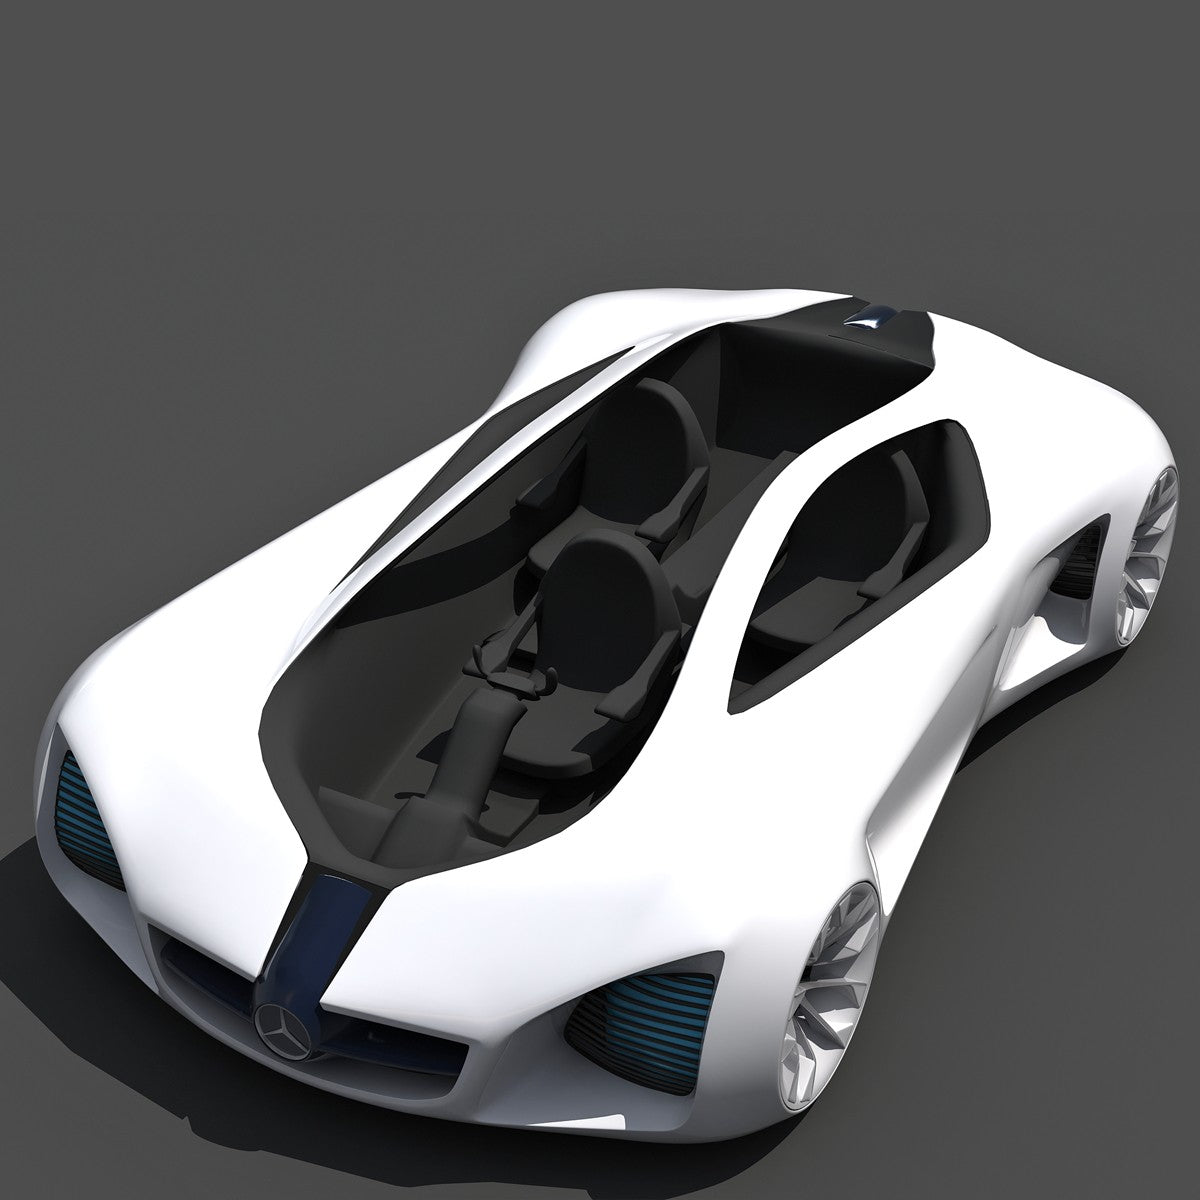 Mercedes Benz Concept Car